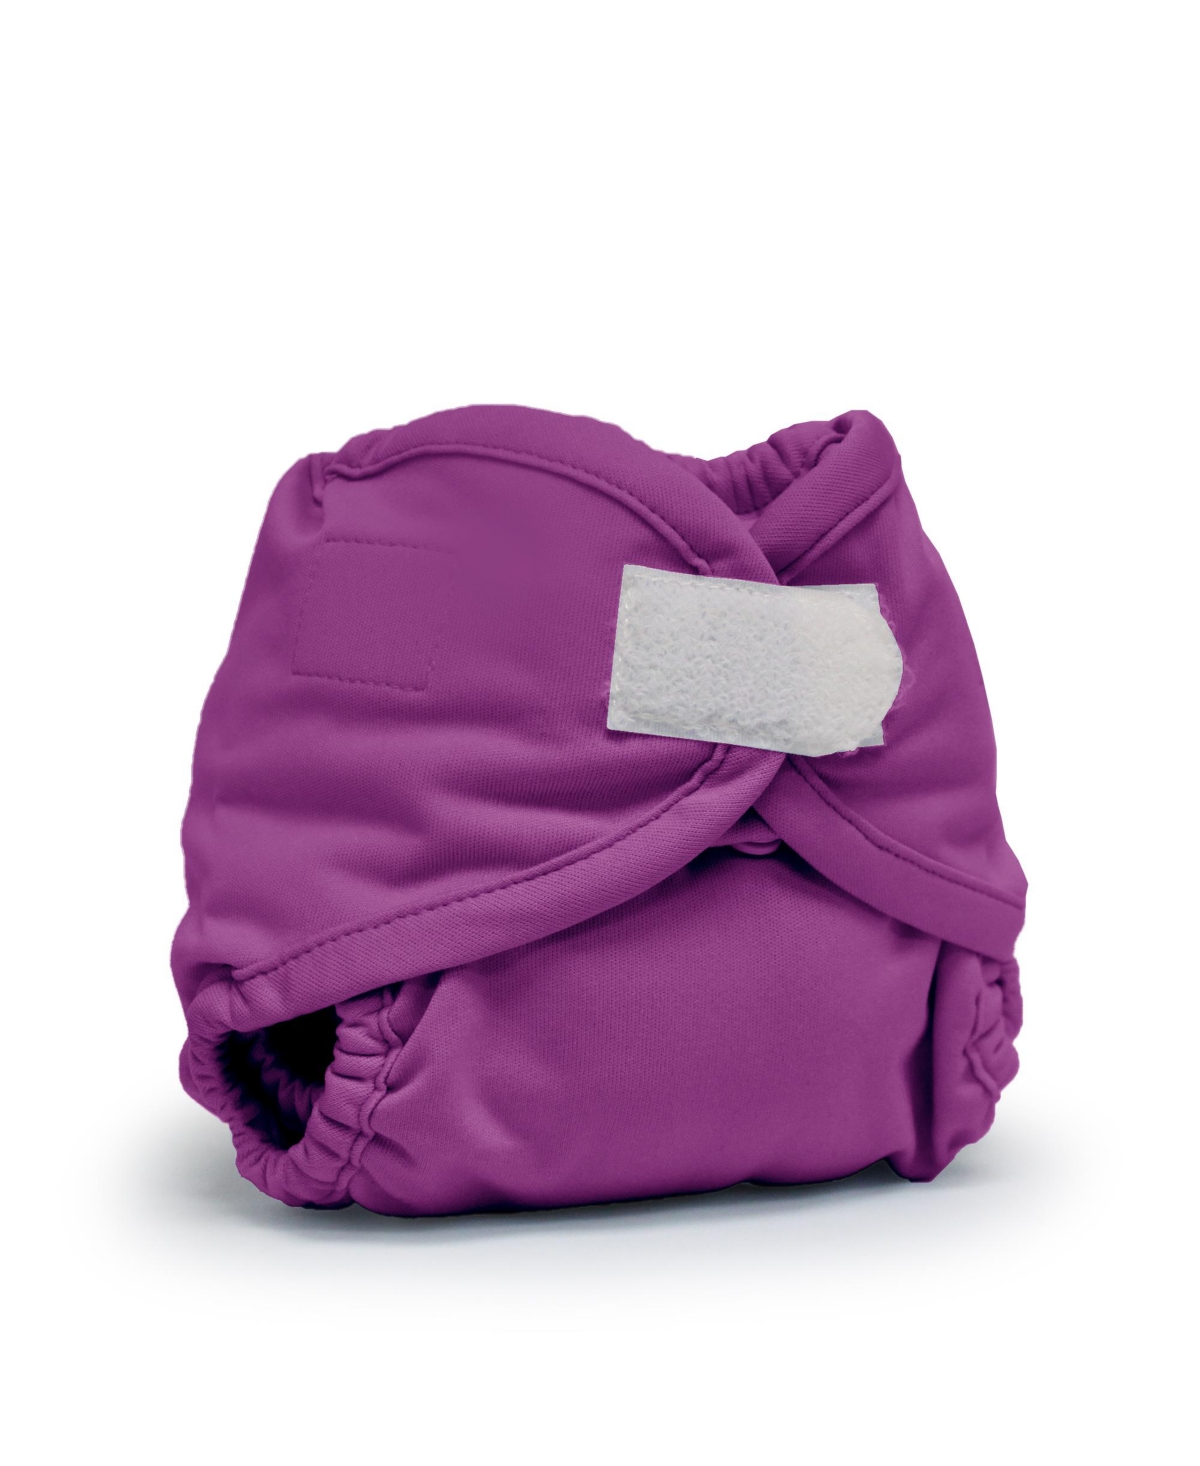 Kanga Care Babies' Rumparooz Reusable Newborn Cloth Diaper Cover Aplix In Purple